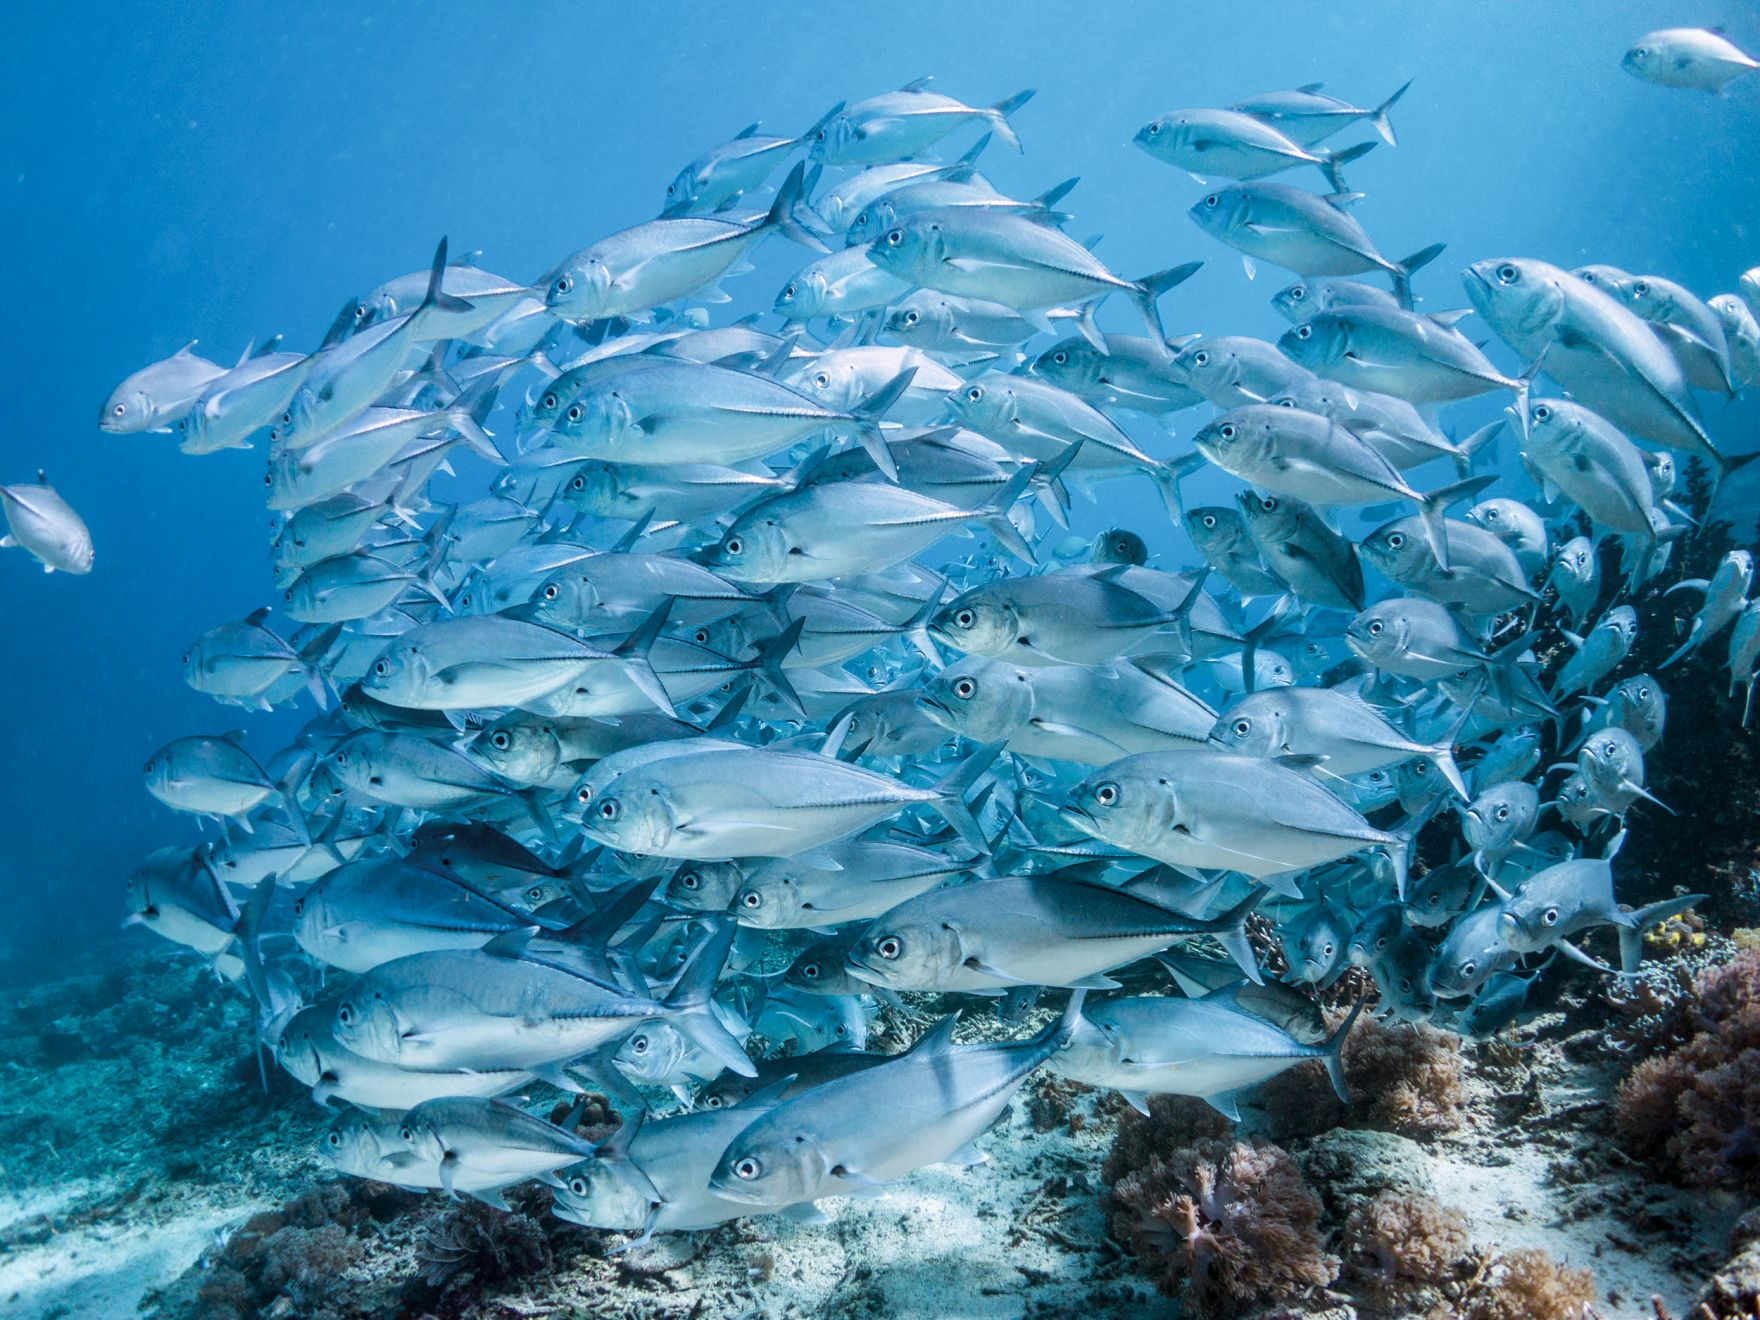 A school of fish swimming in the sea